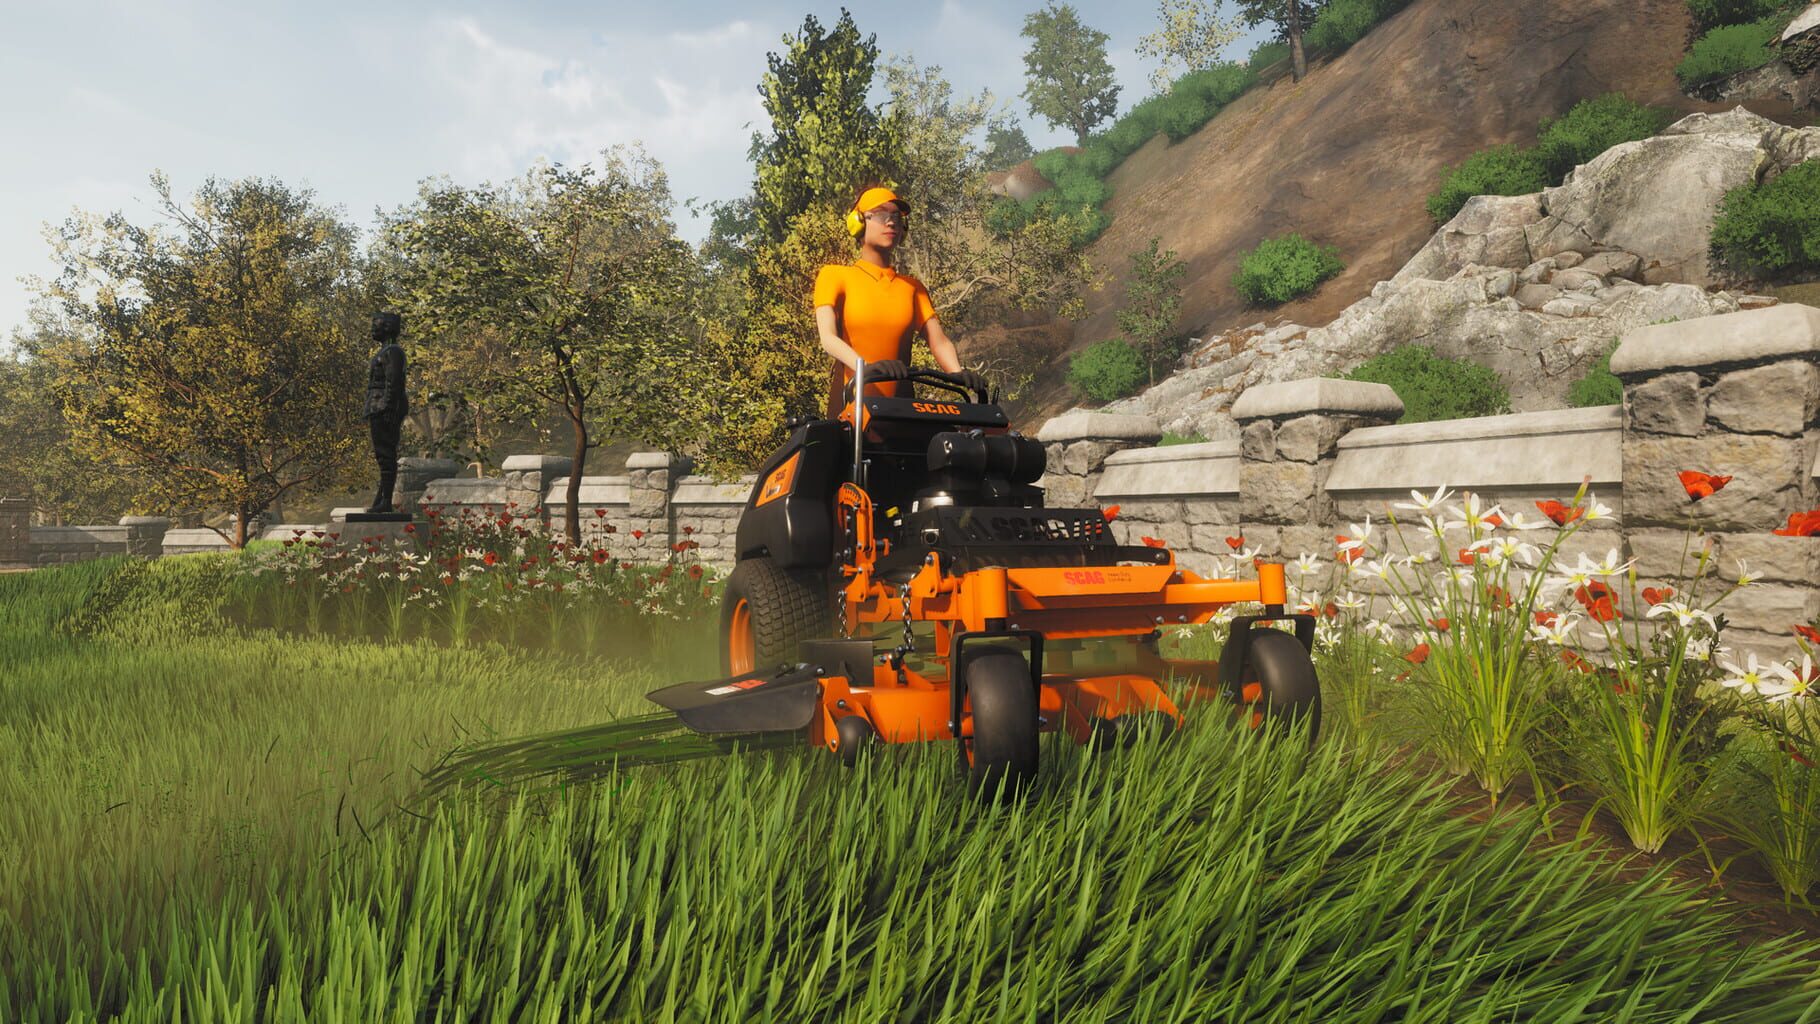 Lawn Mowing Simulator screenshots